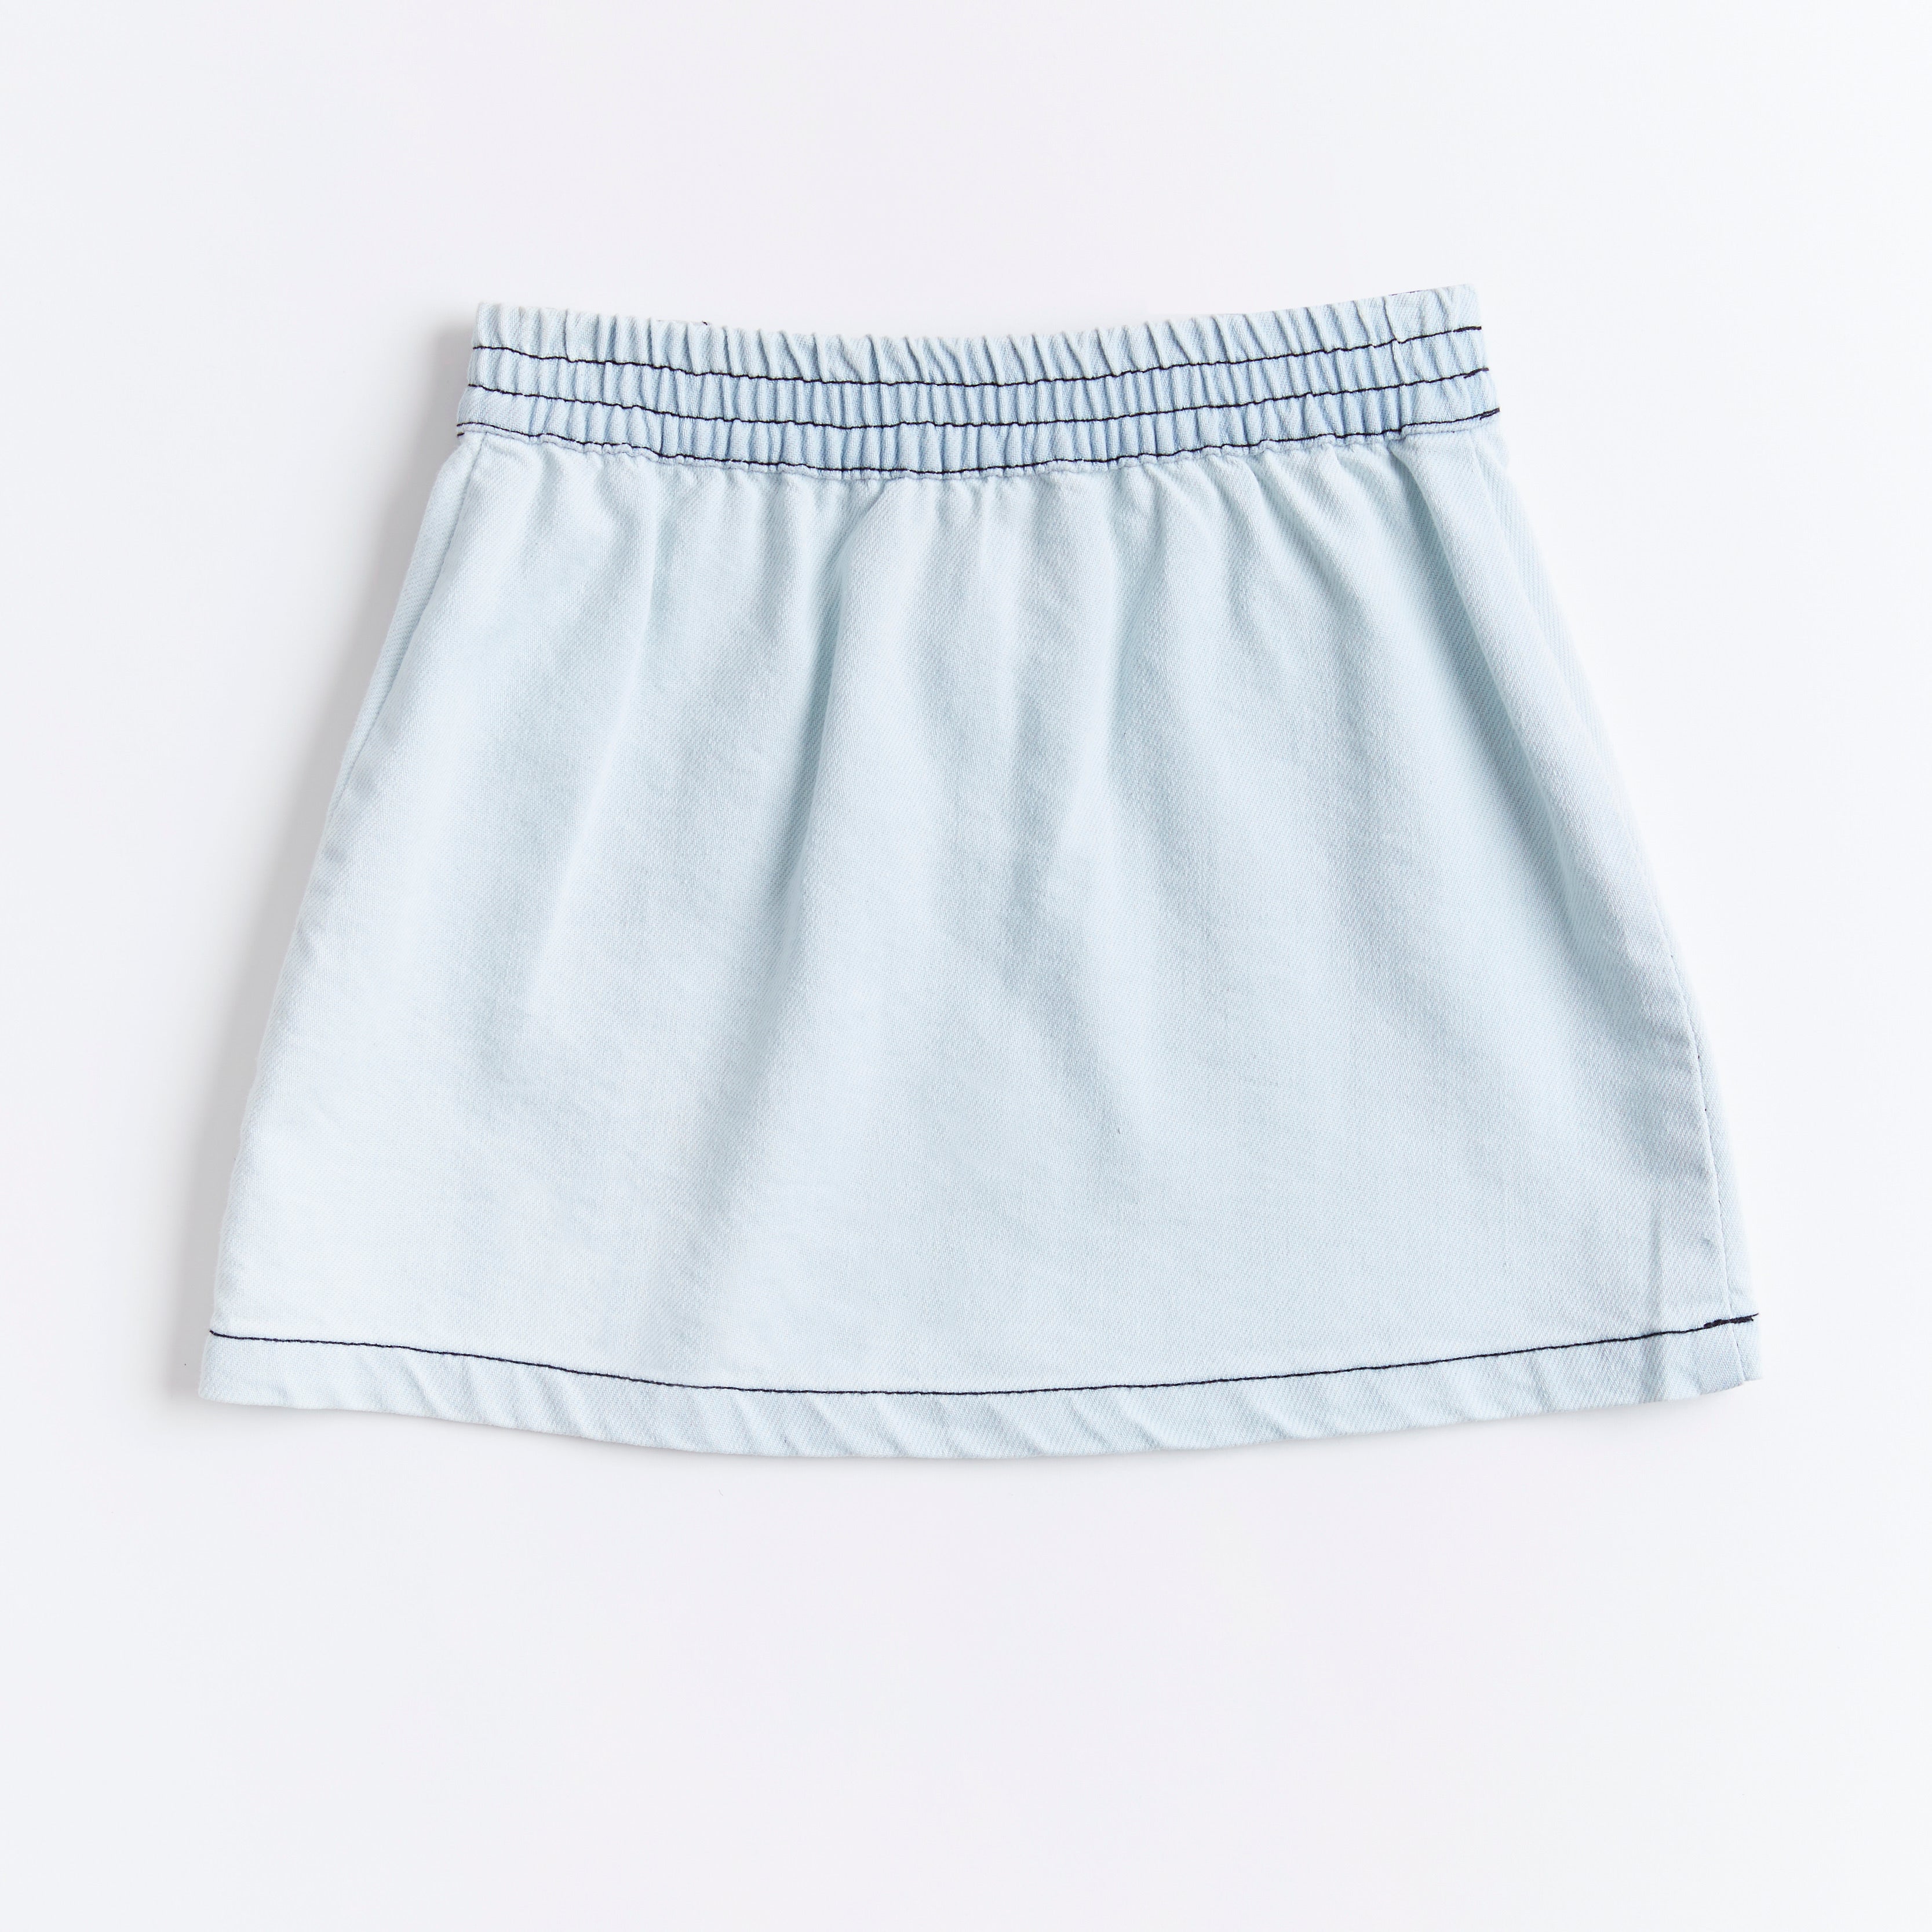 Petite Amalie Denim Plait Skirt